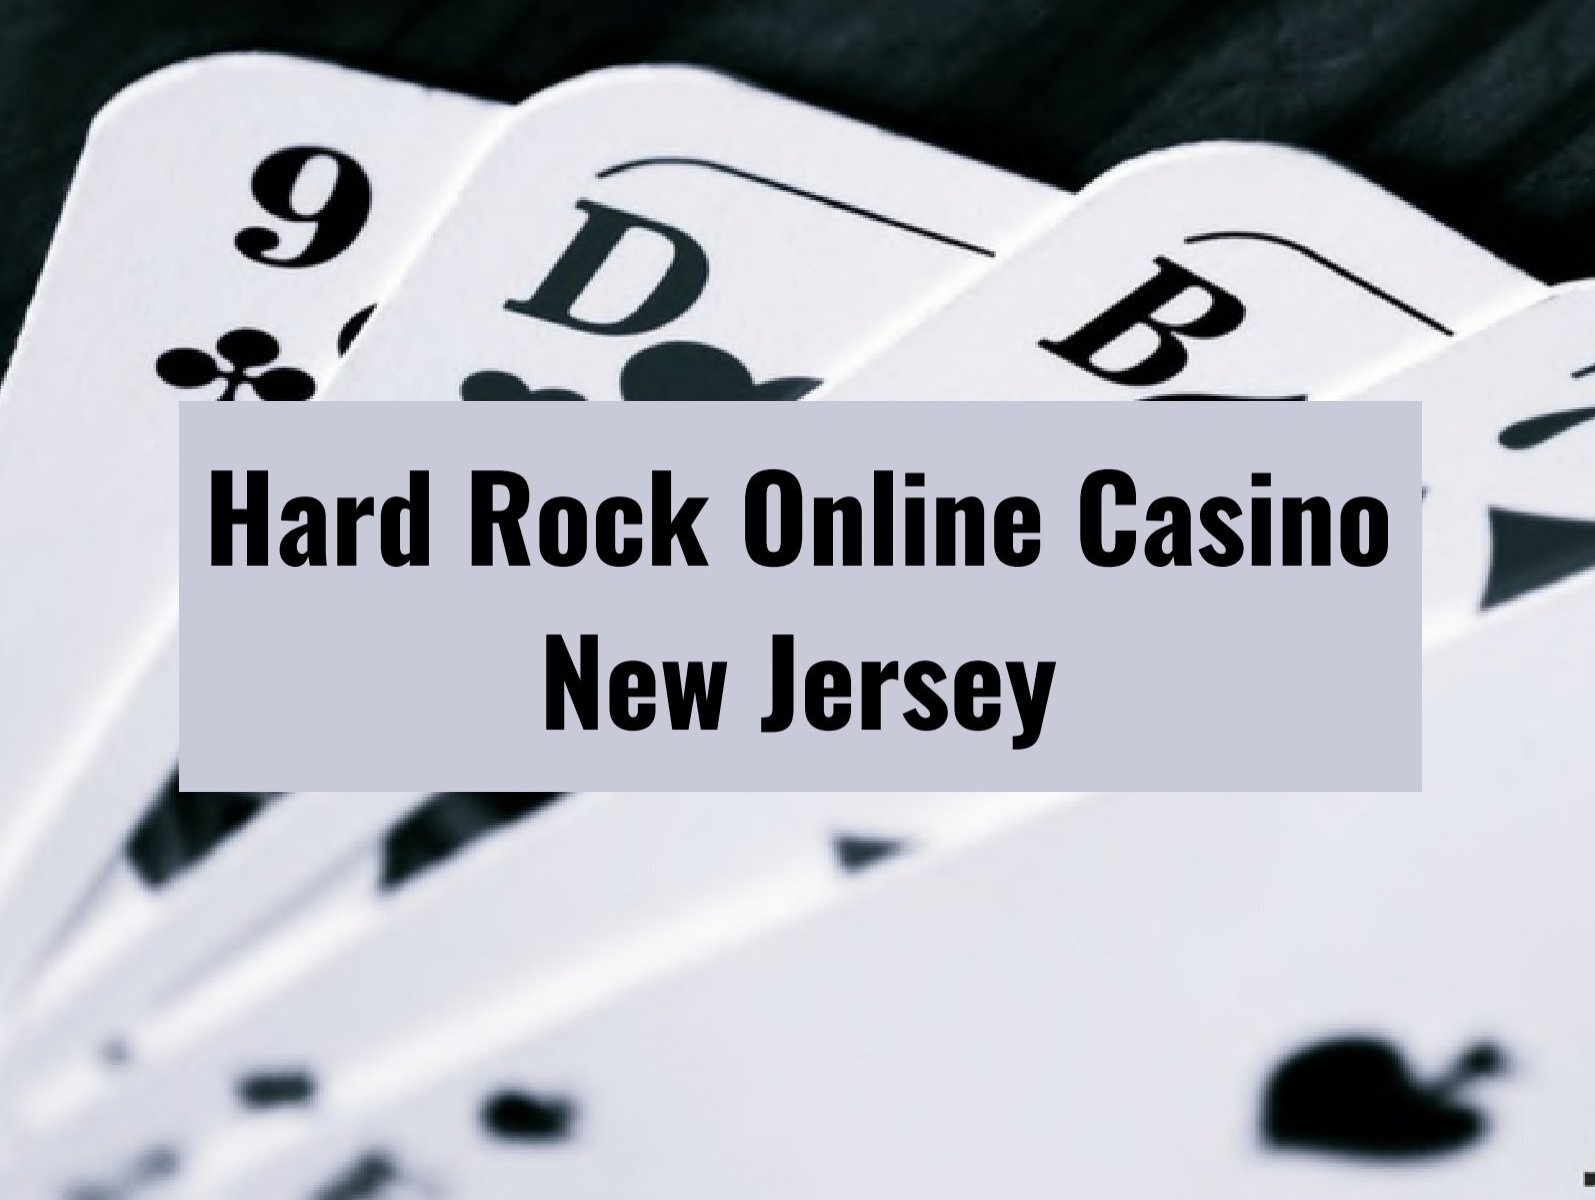 Hard Rock Casino Online Application